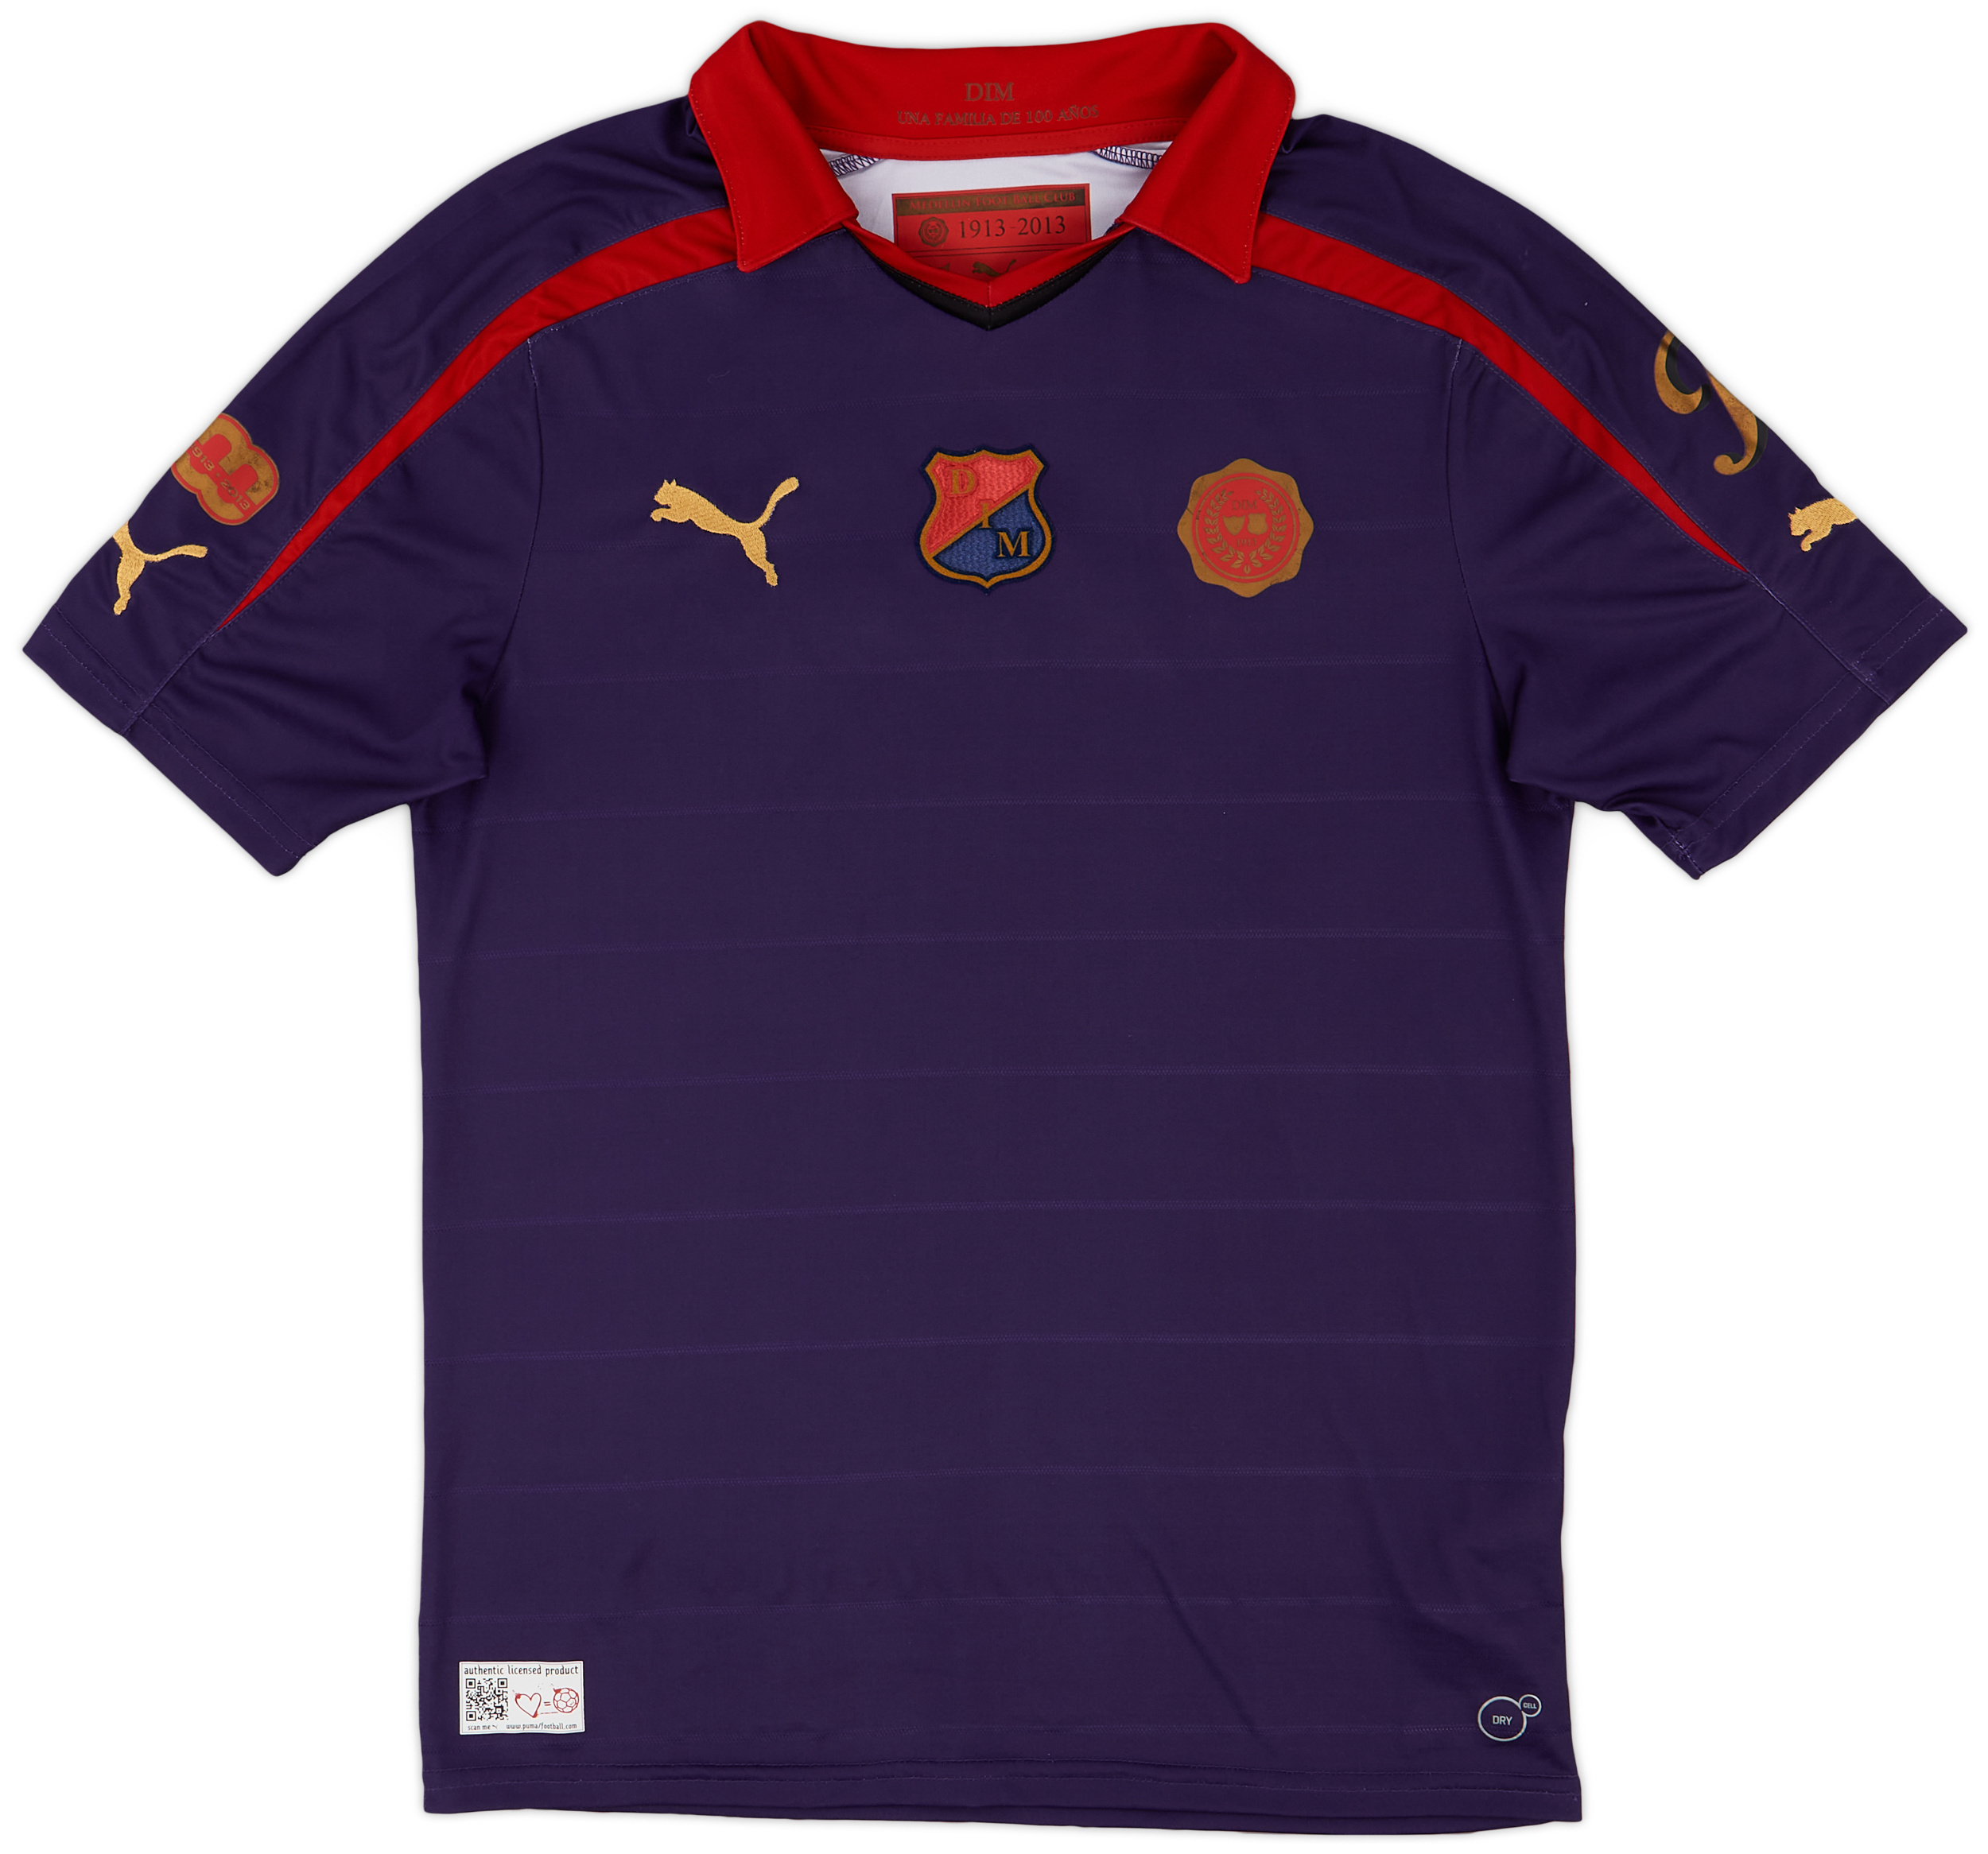 Independiente  Goalkeeper shirt (Original)